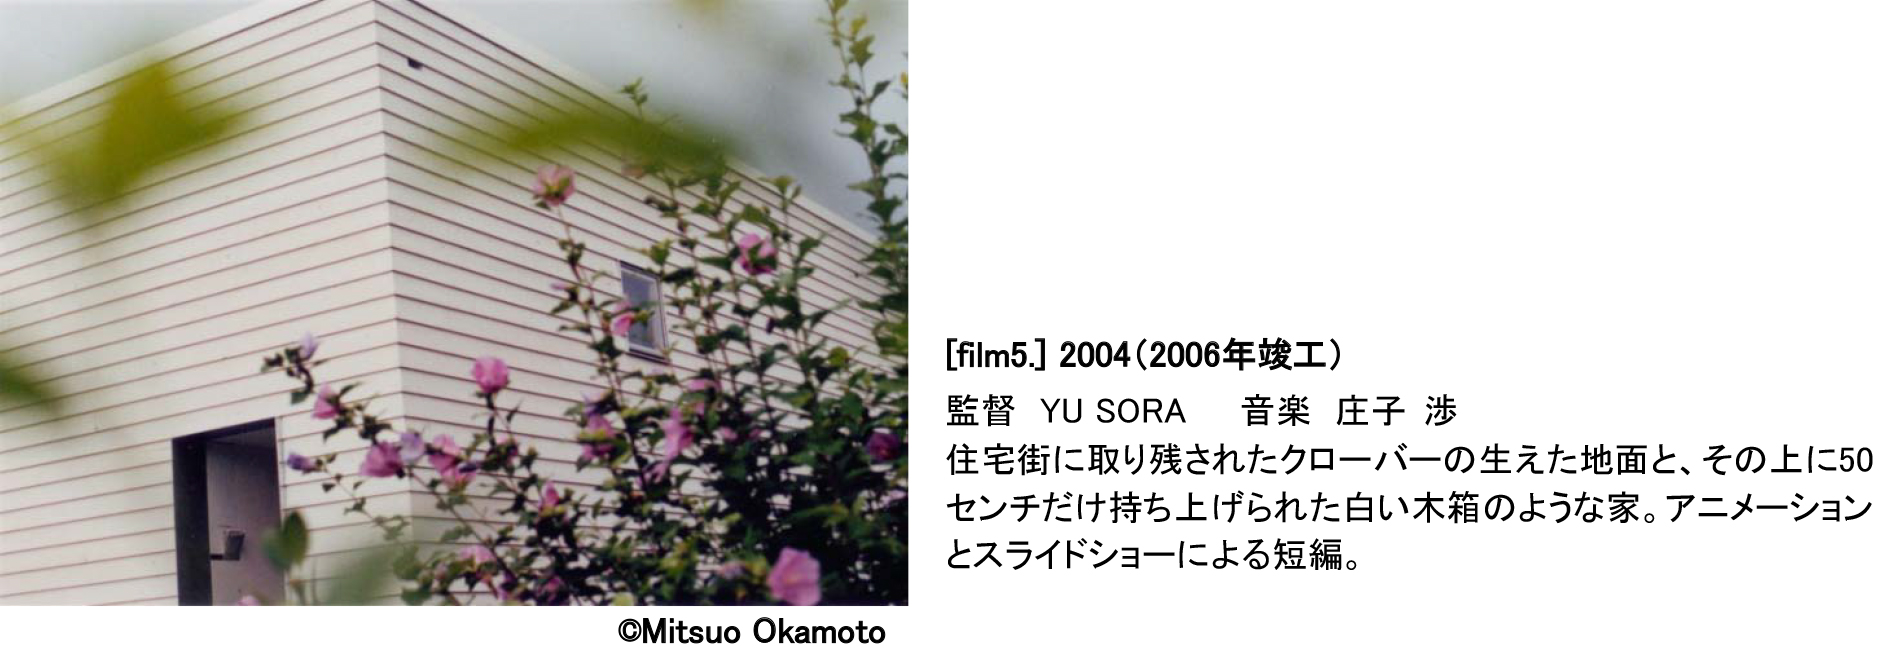 ©Mitsuo Okamoto [film5.] 2004（2006年竣工）監督 YU SORA   音楽 庄子 渉 住宅街に取り残されたクローバーの生えた地面と、その上に50センチだけ持ち上げられた白い木箱のような家。アニメーションとスライドショーによる短編。